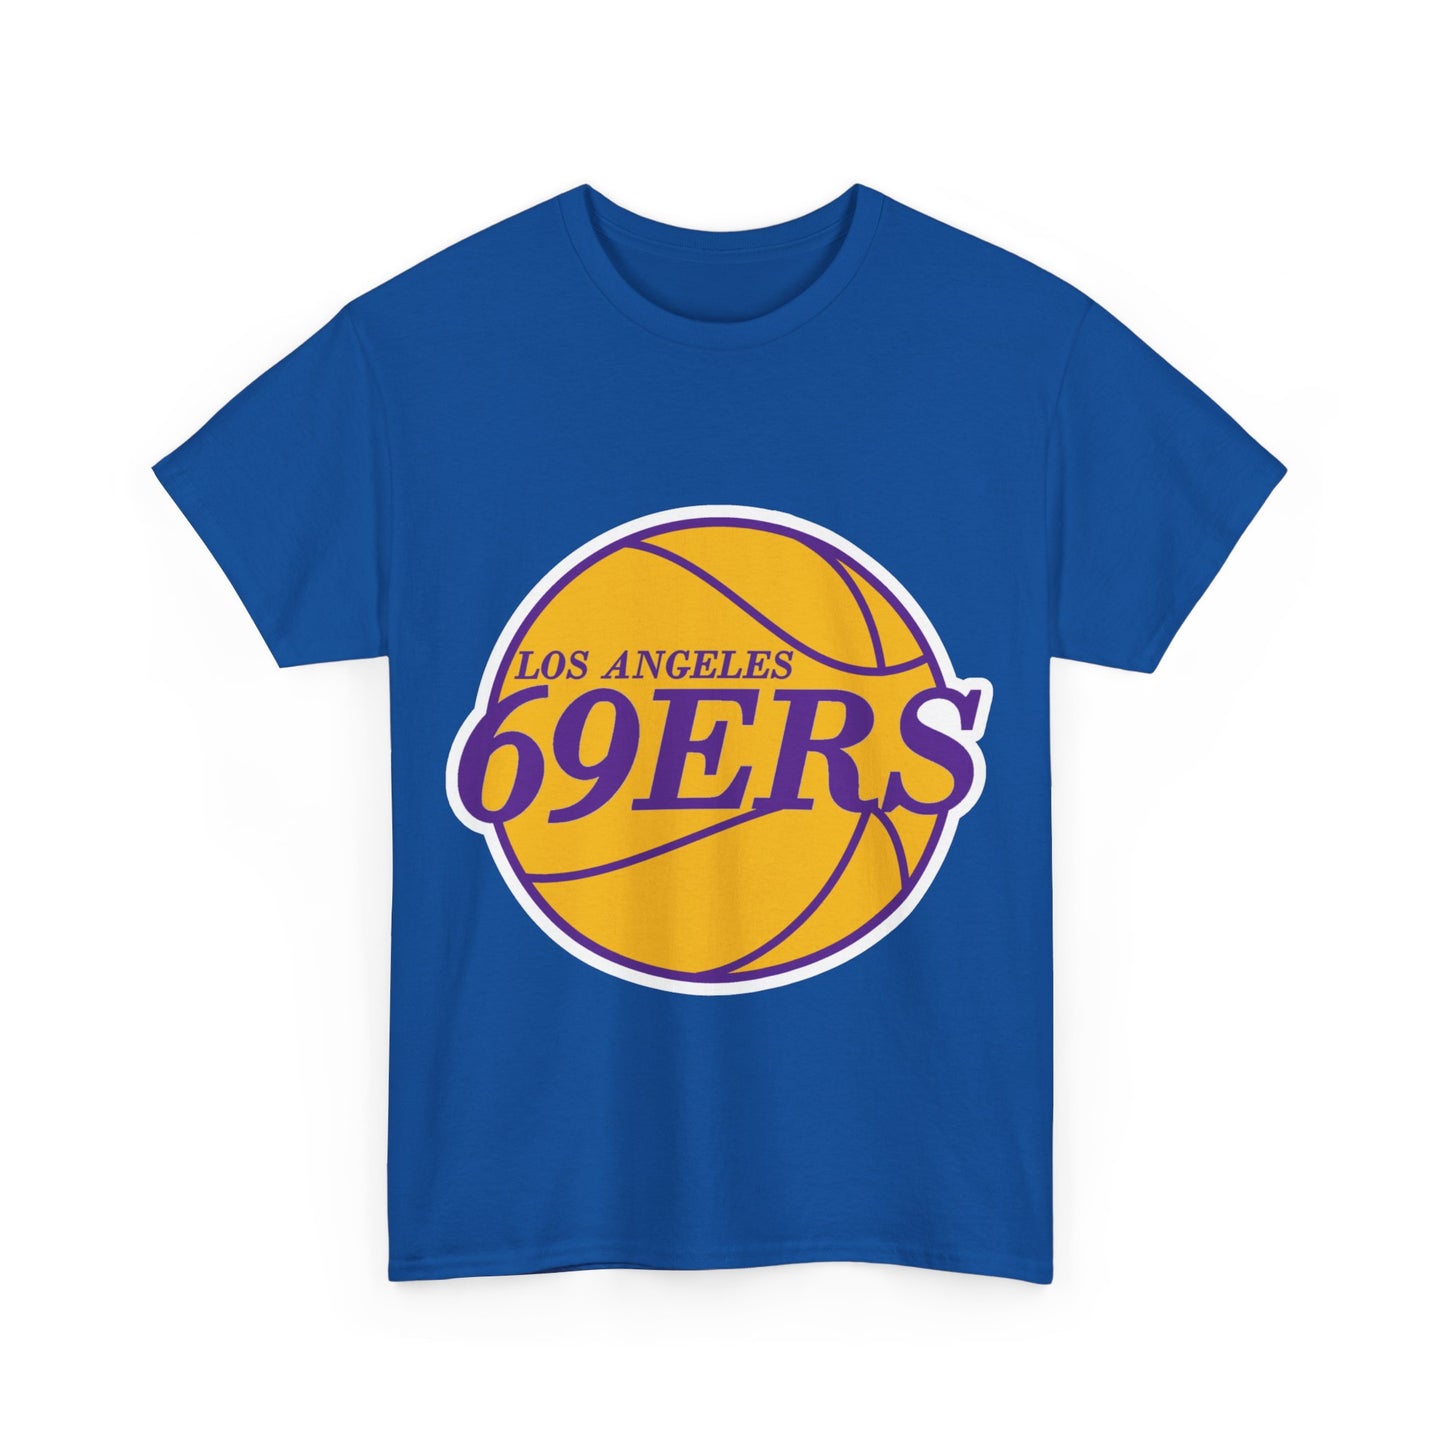 Los Angeles 69ers Unisex Cotton T-Shirt (Los Angeles Lakers Parody)